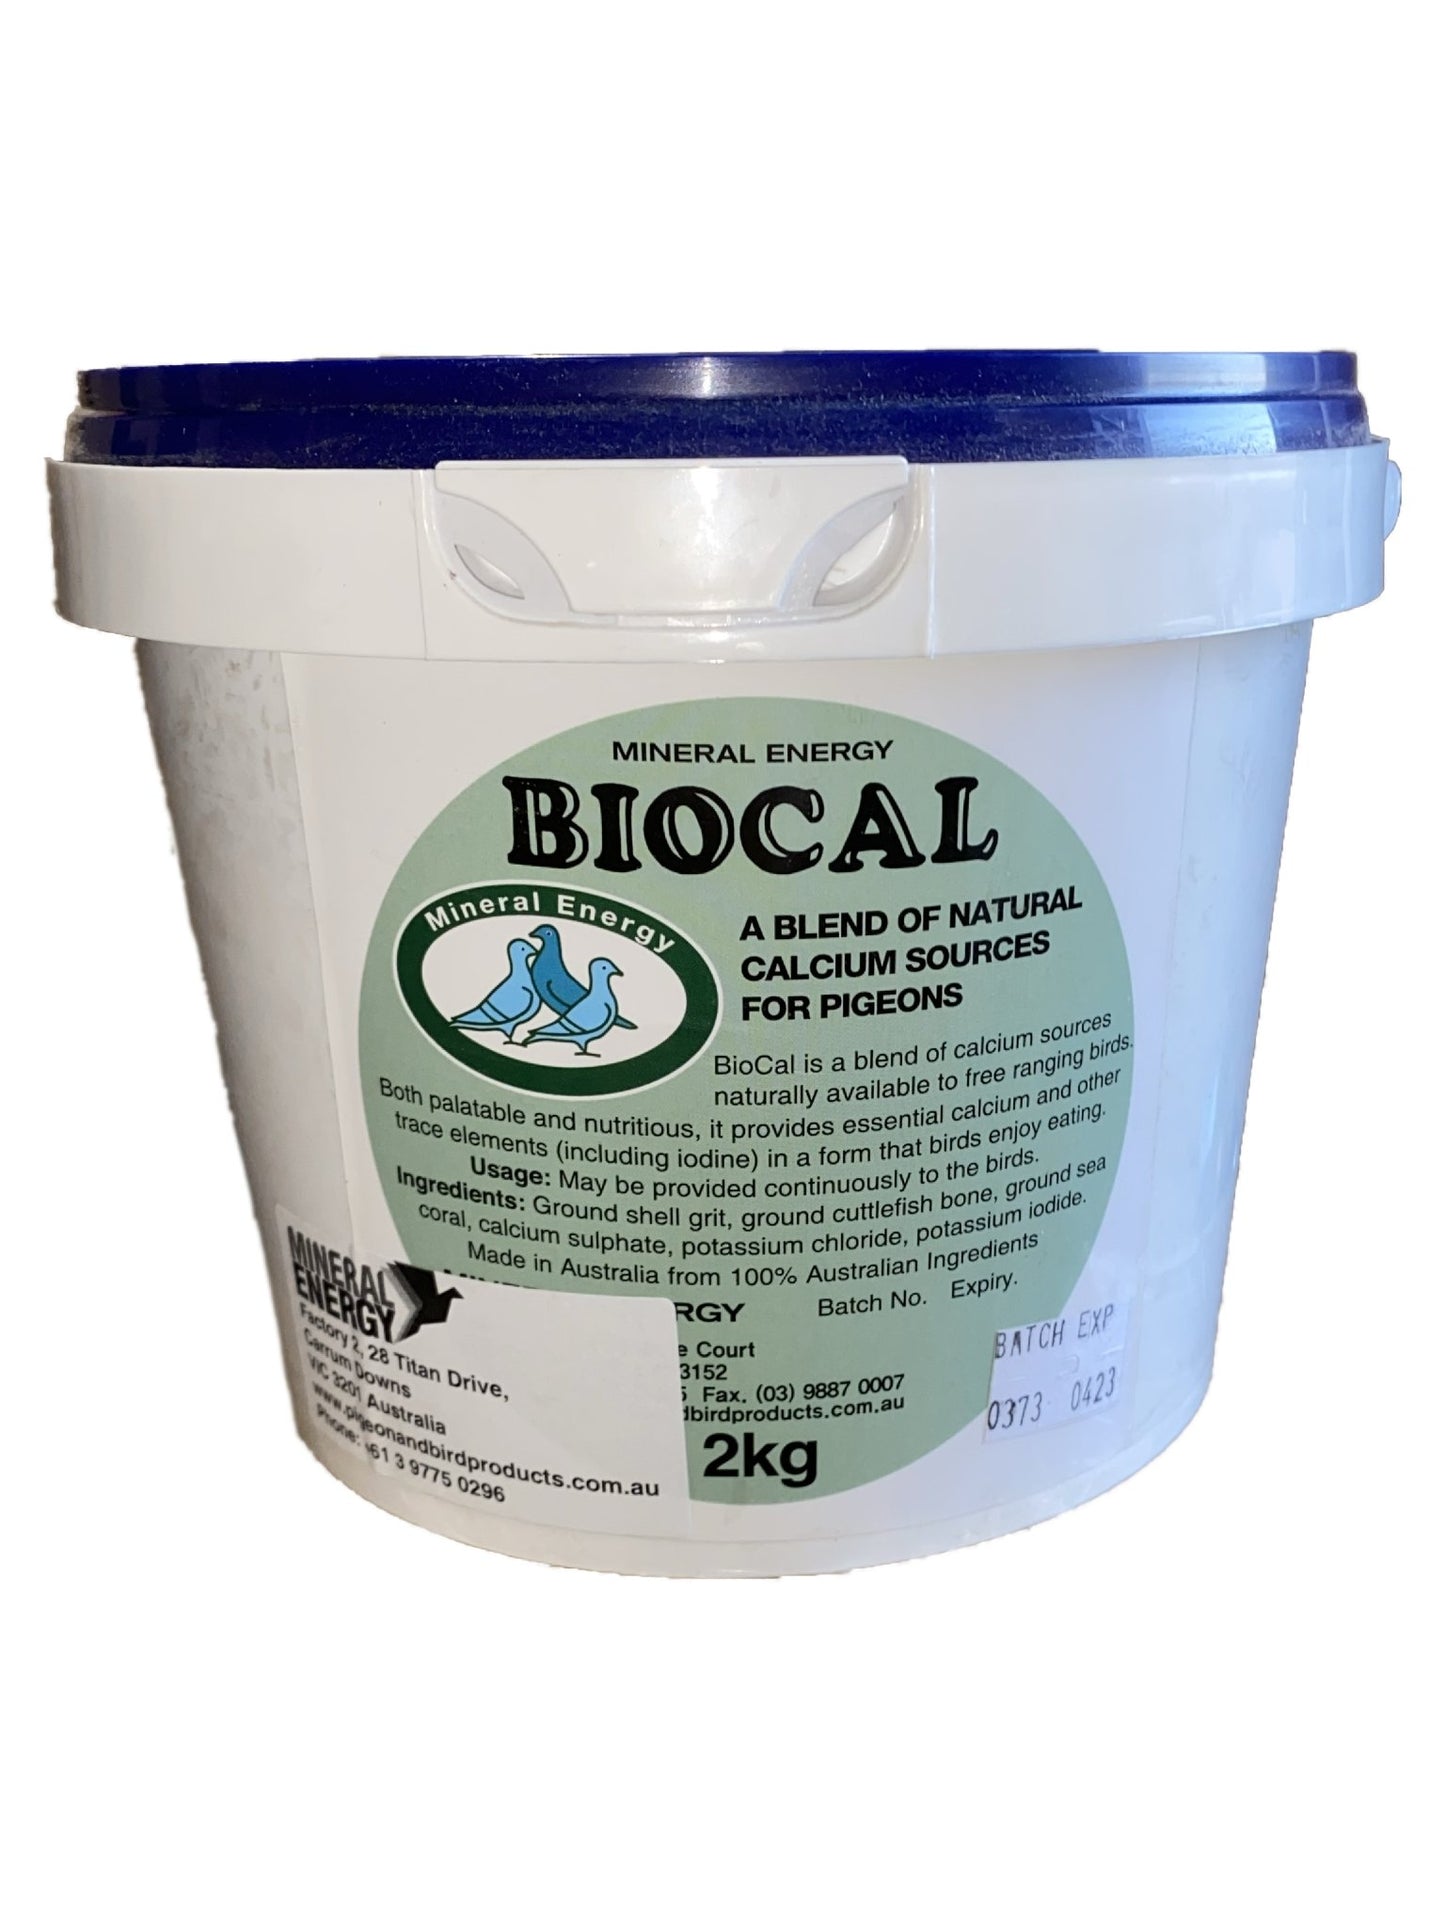 Mineral Energy Biocal - Woonona Petfood & Produce